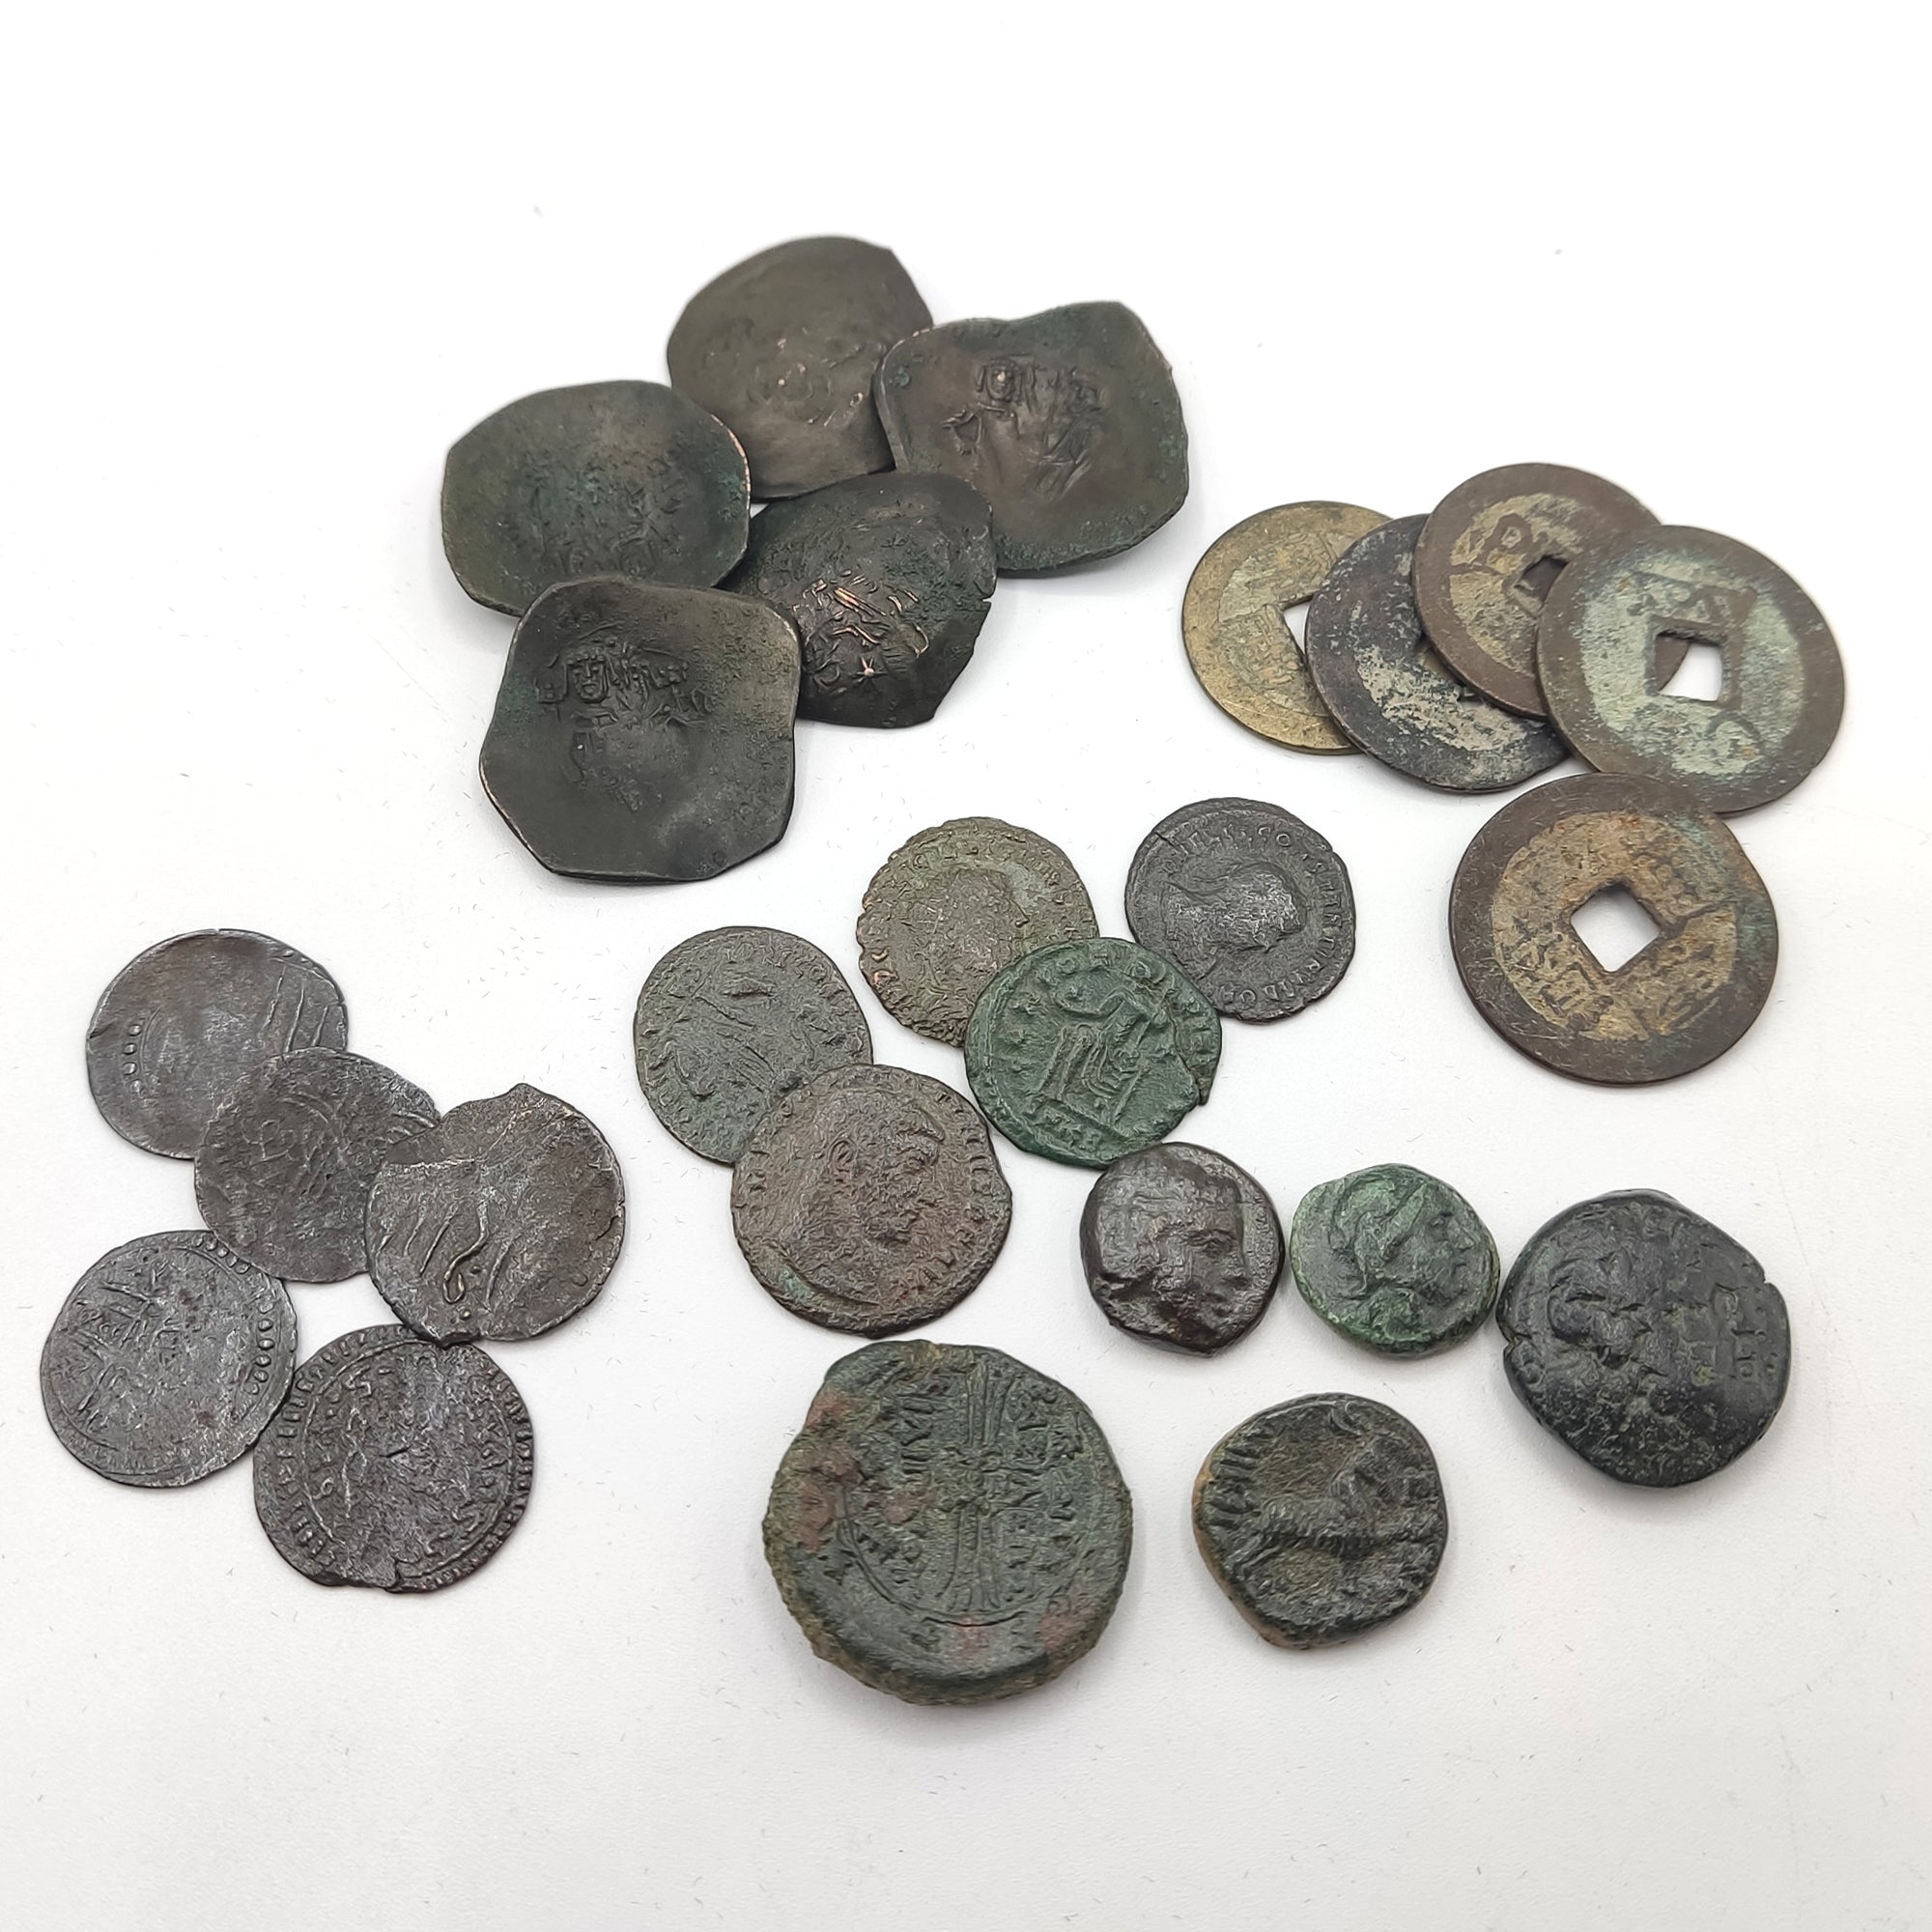 5 Original Coins from Ancient Empires in a Coin Grab Bag - Greek Empir 